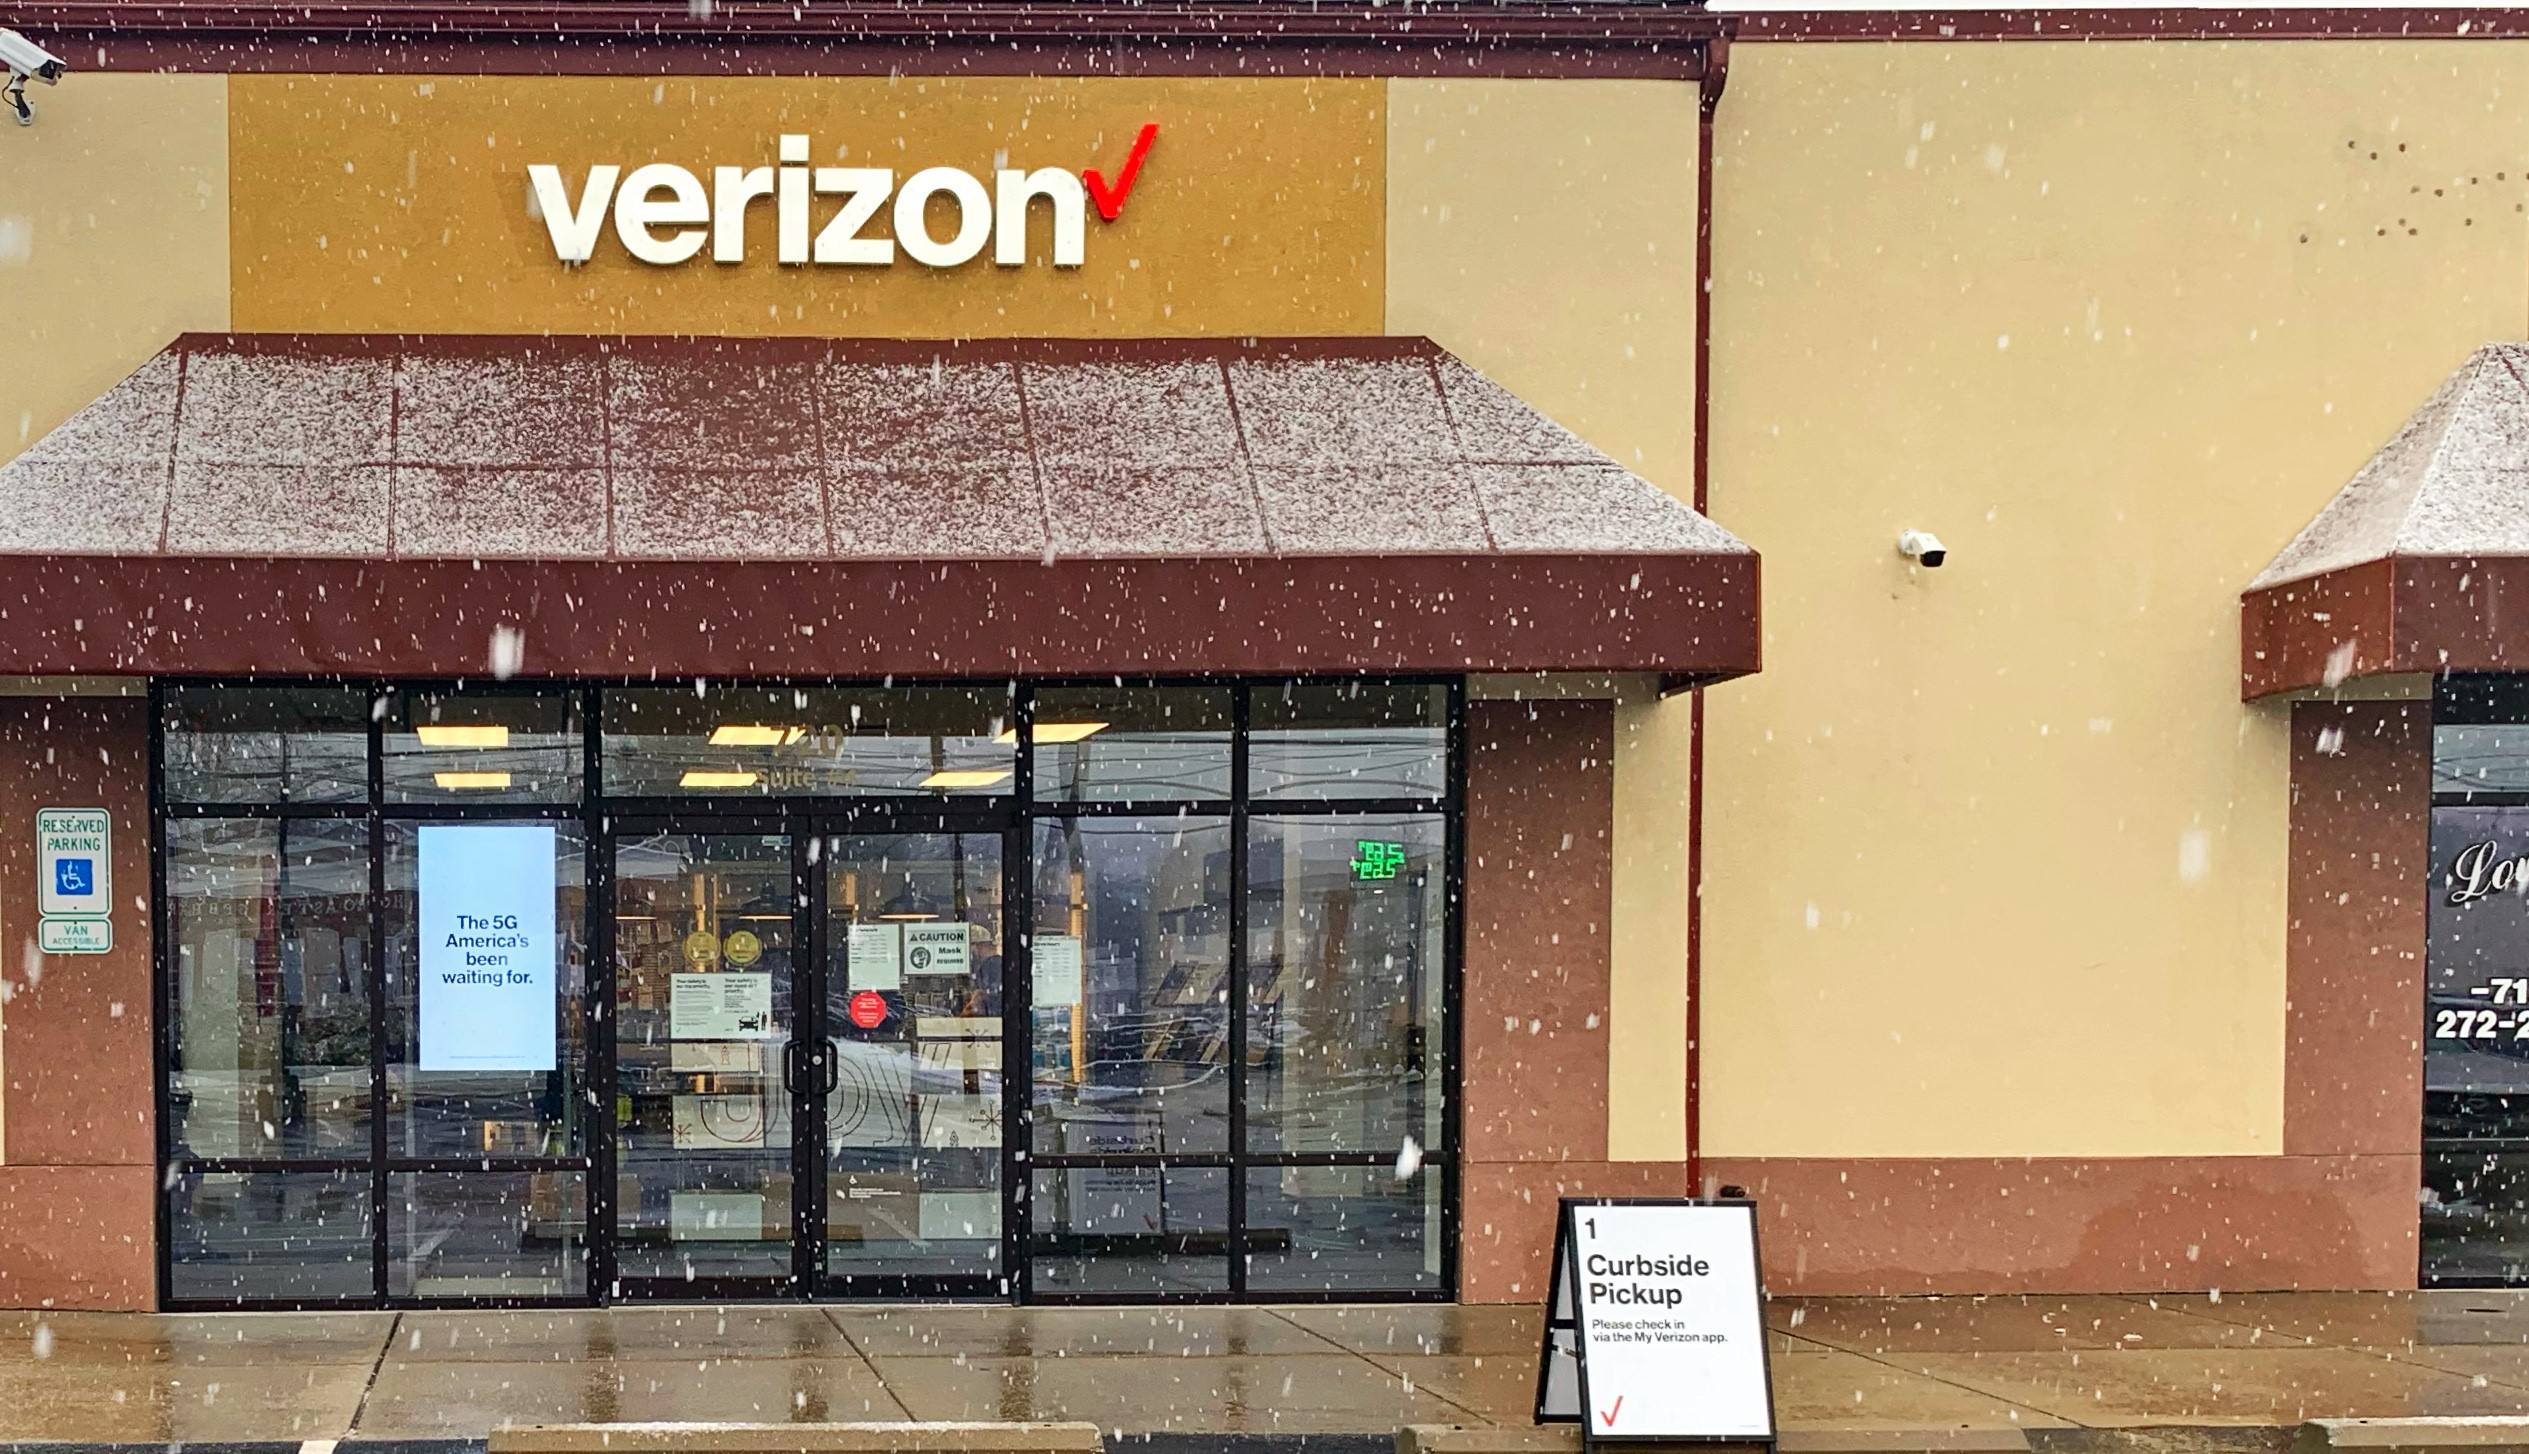 TCC, Verizon Authorized Retailer
720 Quentin Road
Lebanon, PA